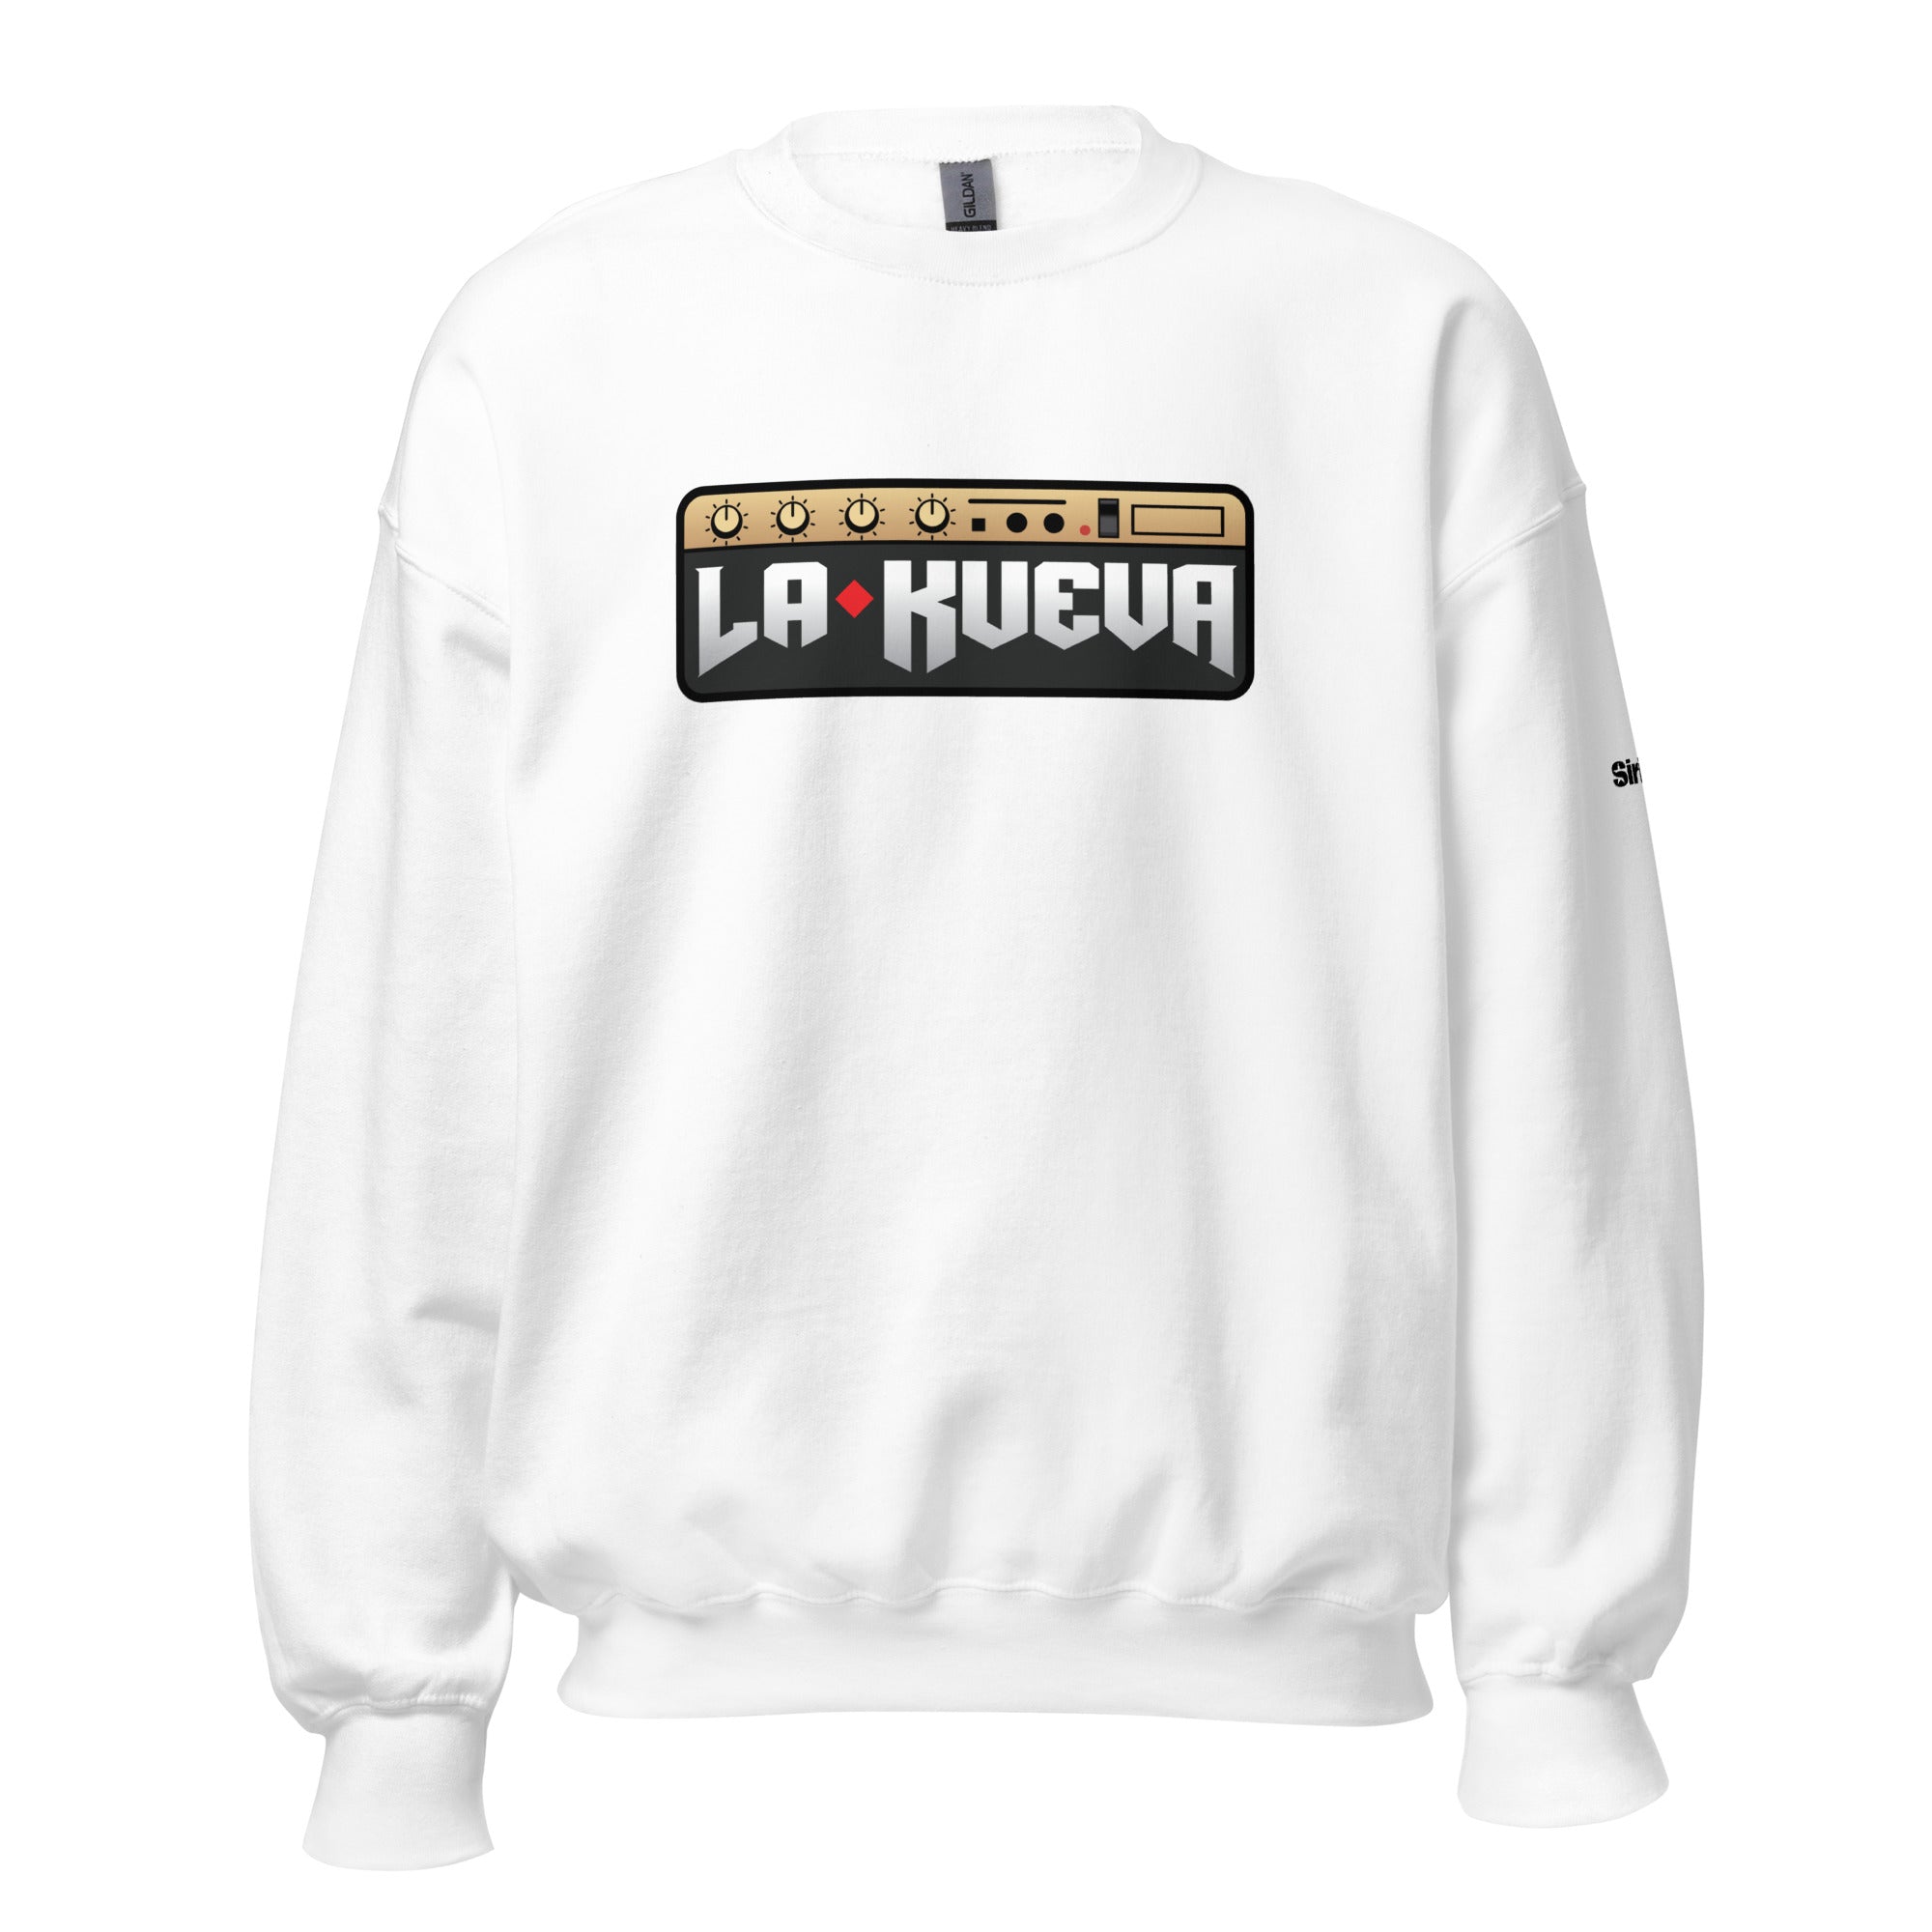 La Kueva: Sweatshirt (White)